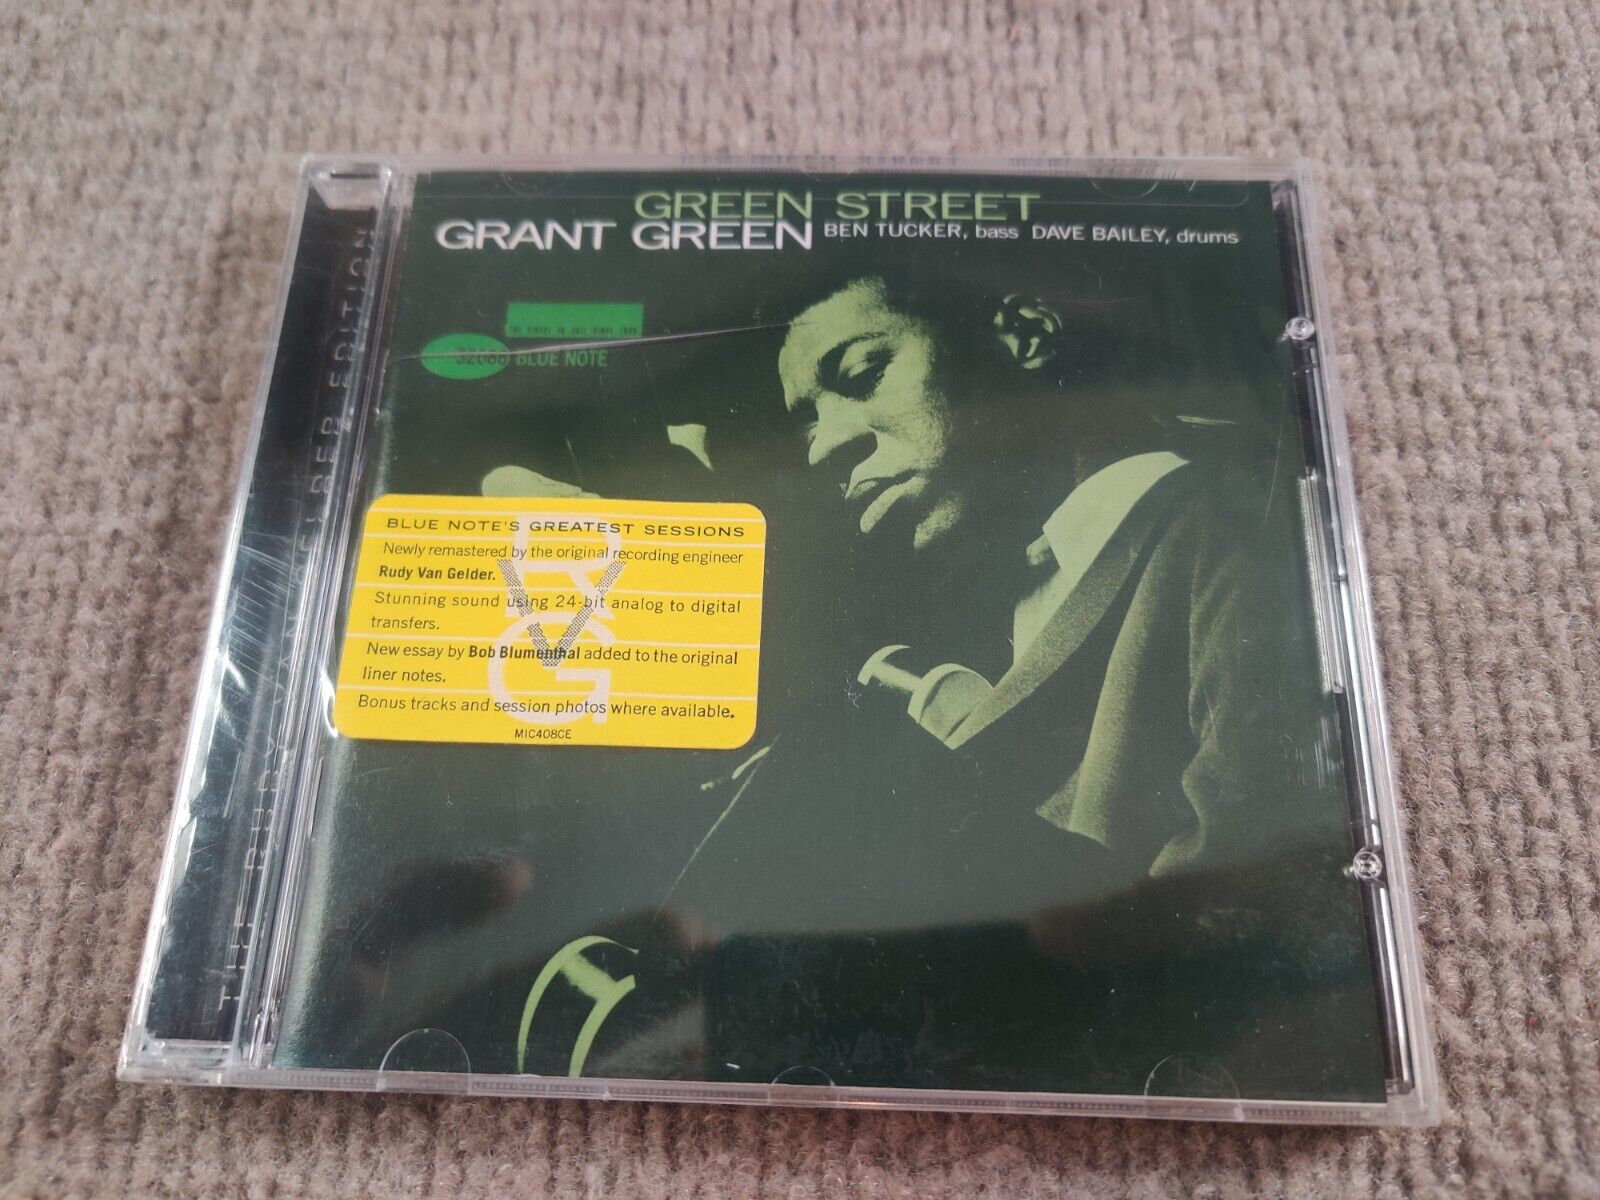 Green Street by Grant Green (CD, 2002) w/ Ben Tucker & Dave Bailey RVG